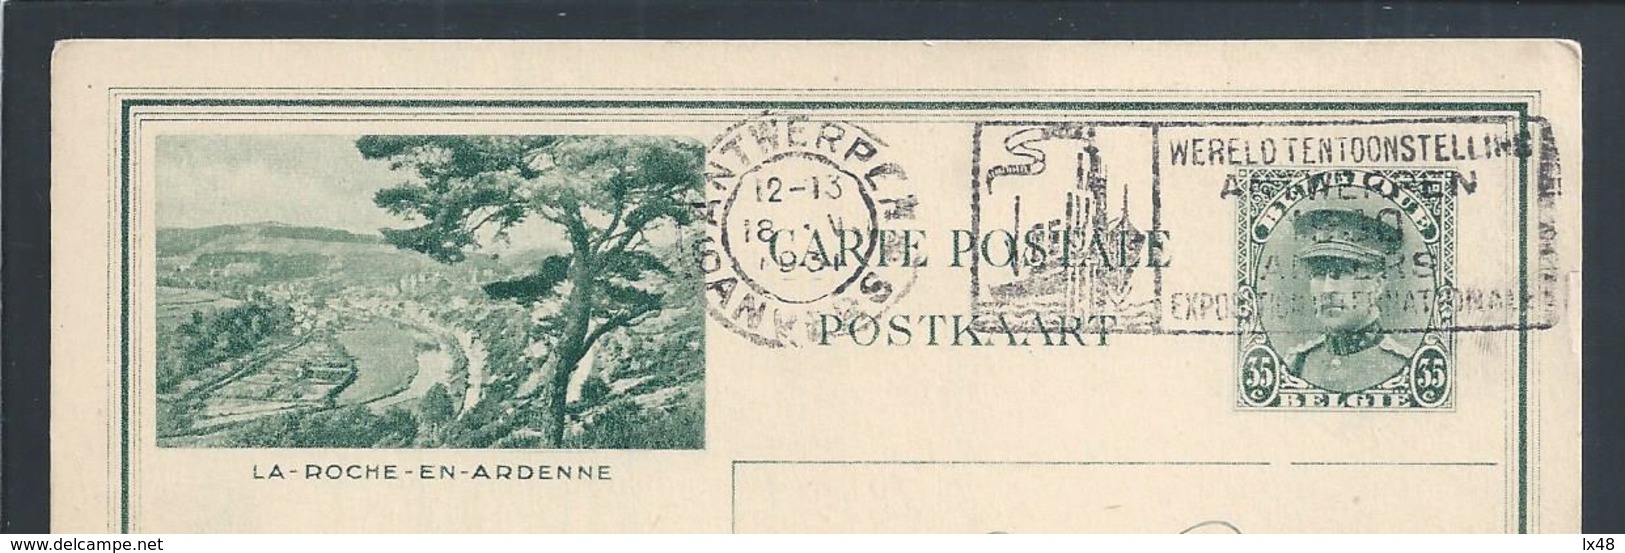 Pennant Of International Fair Liege And Antwerp 1930. Postcard Stationery Of La Roche En Ardenne. King Albert I. - 1930 – Liège (Belgique)